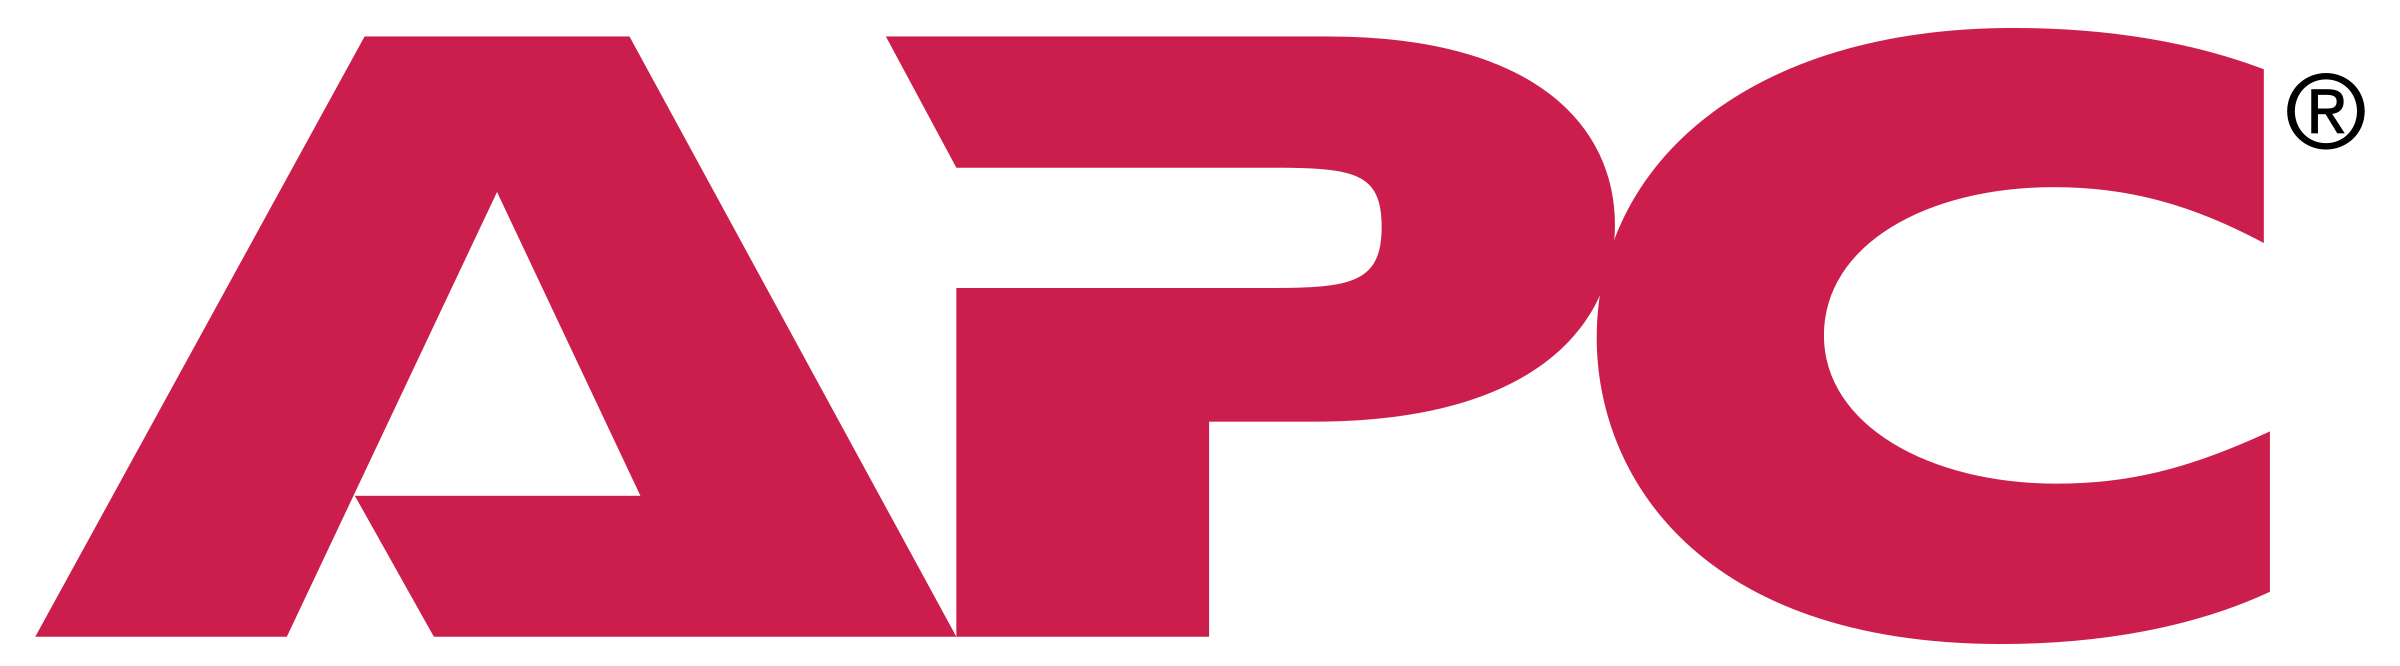 apc-01-logo-png